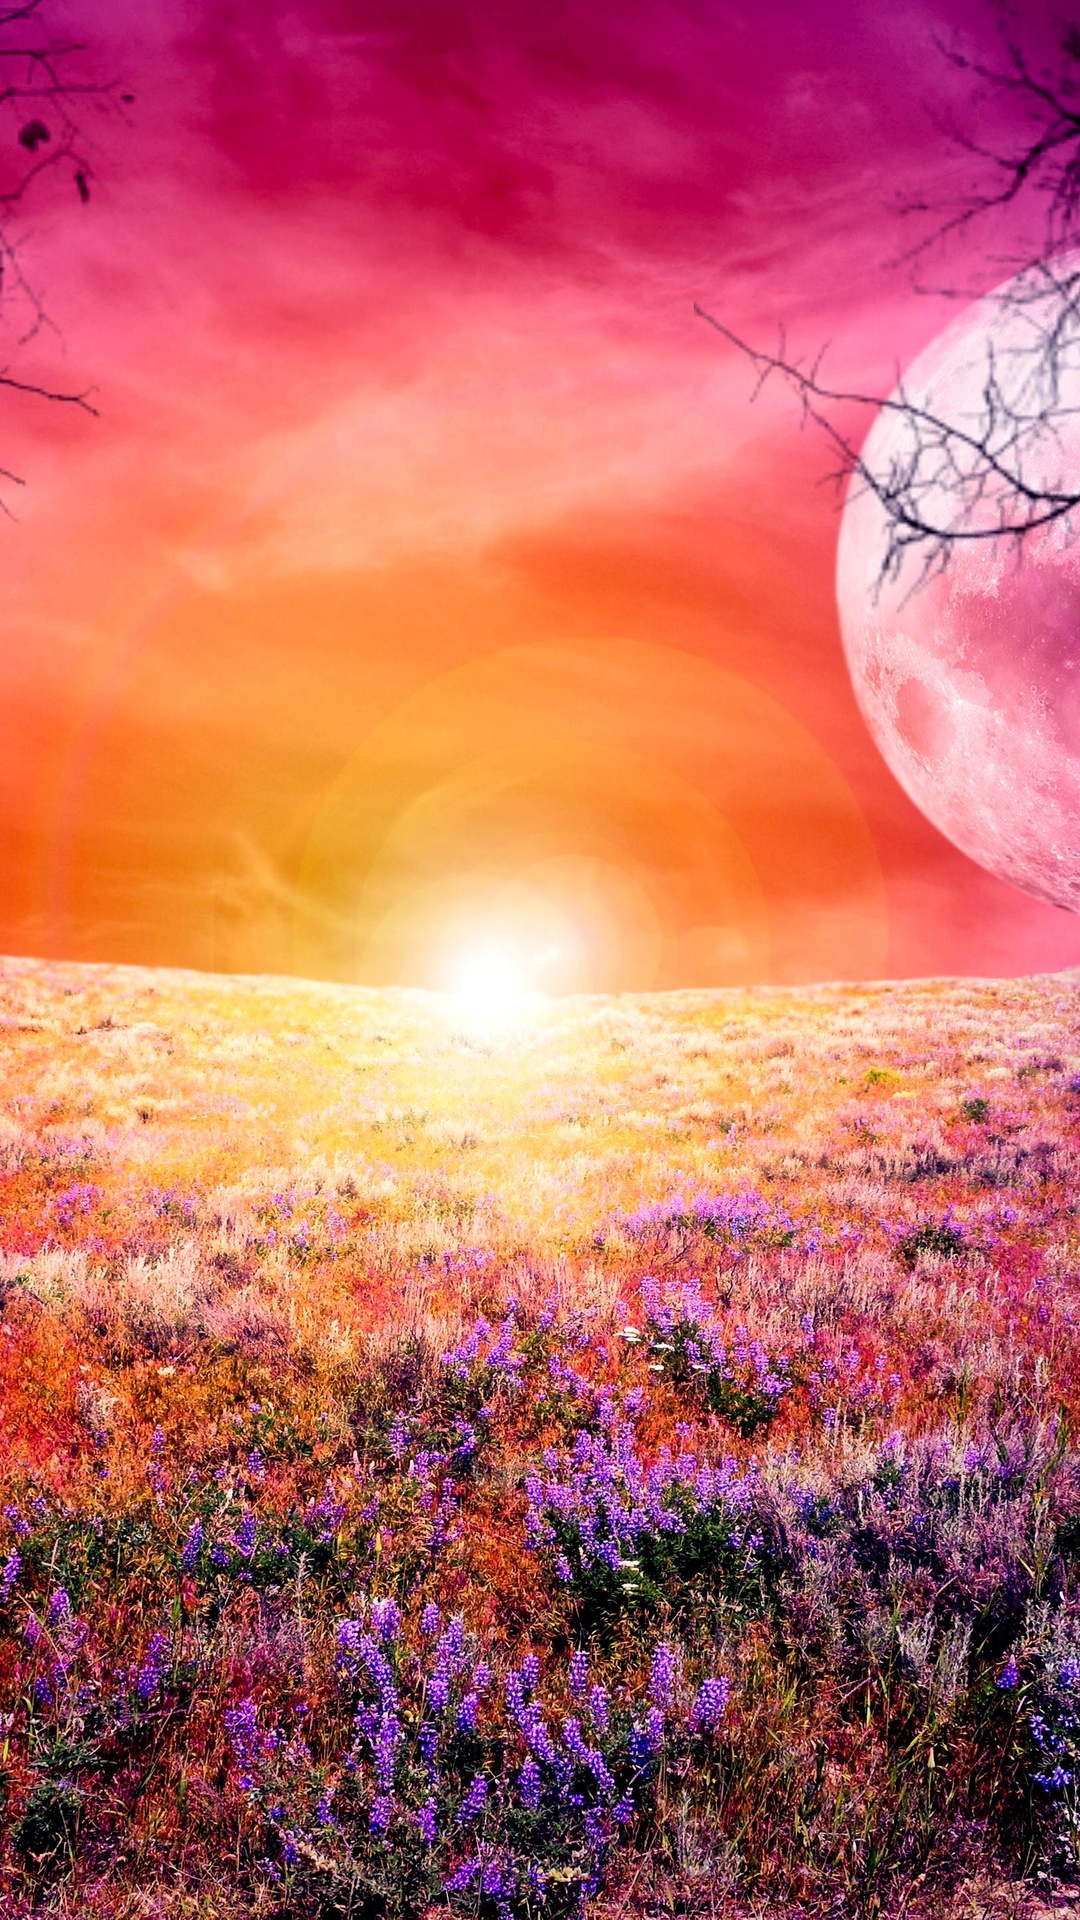 Colorful Full Moon 4k Ultra HD Wallpaper